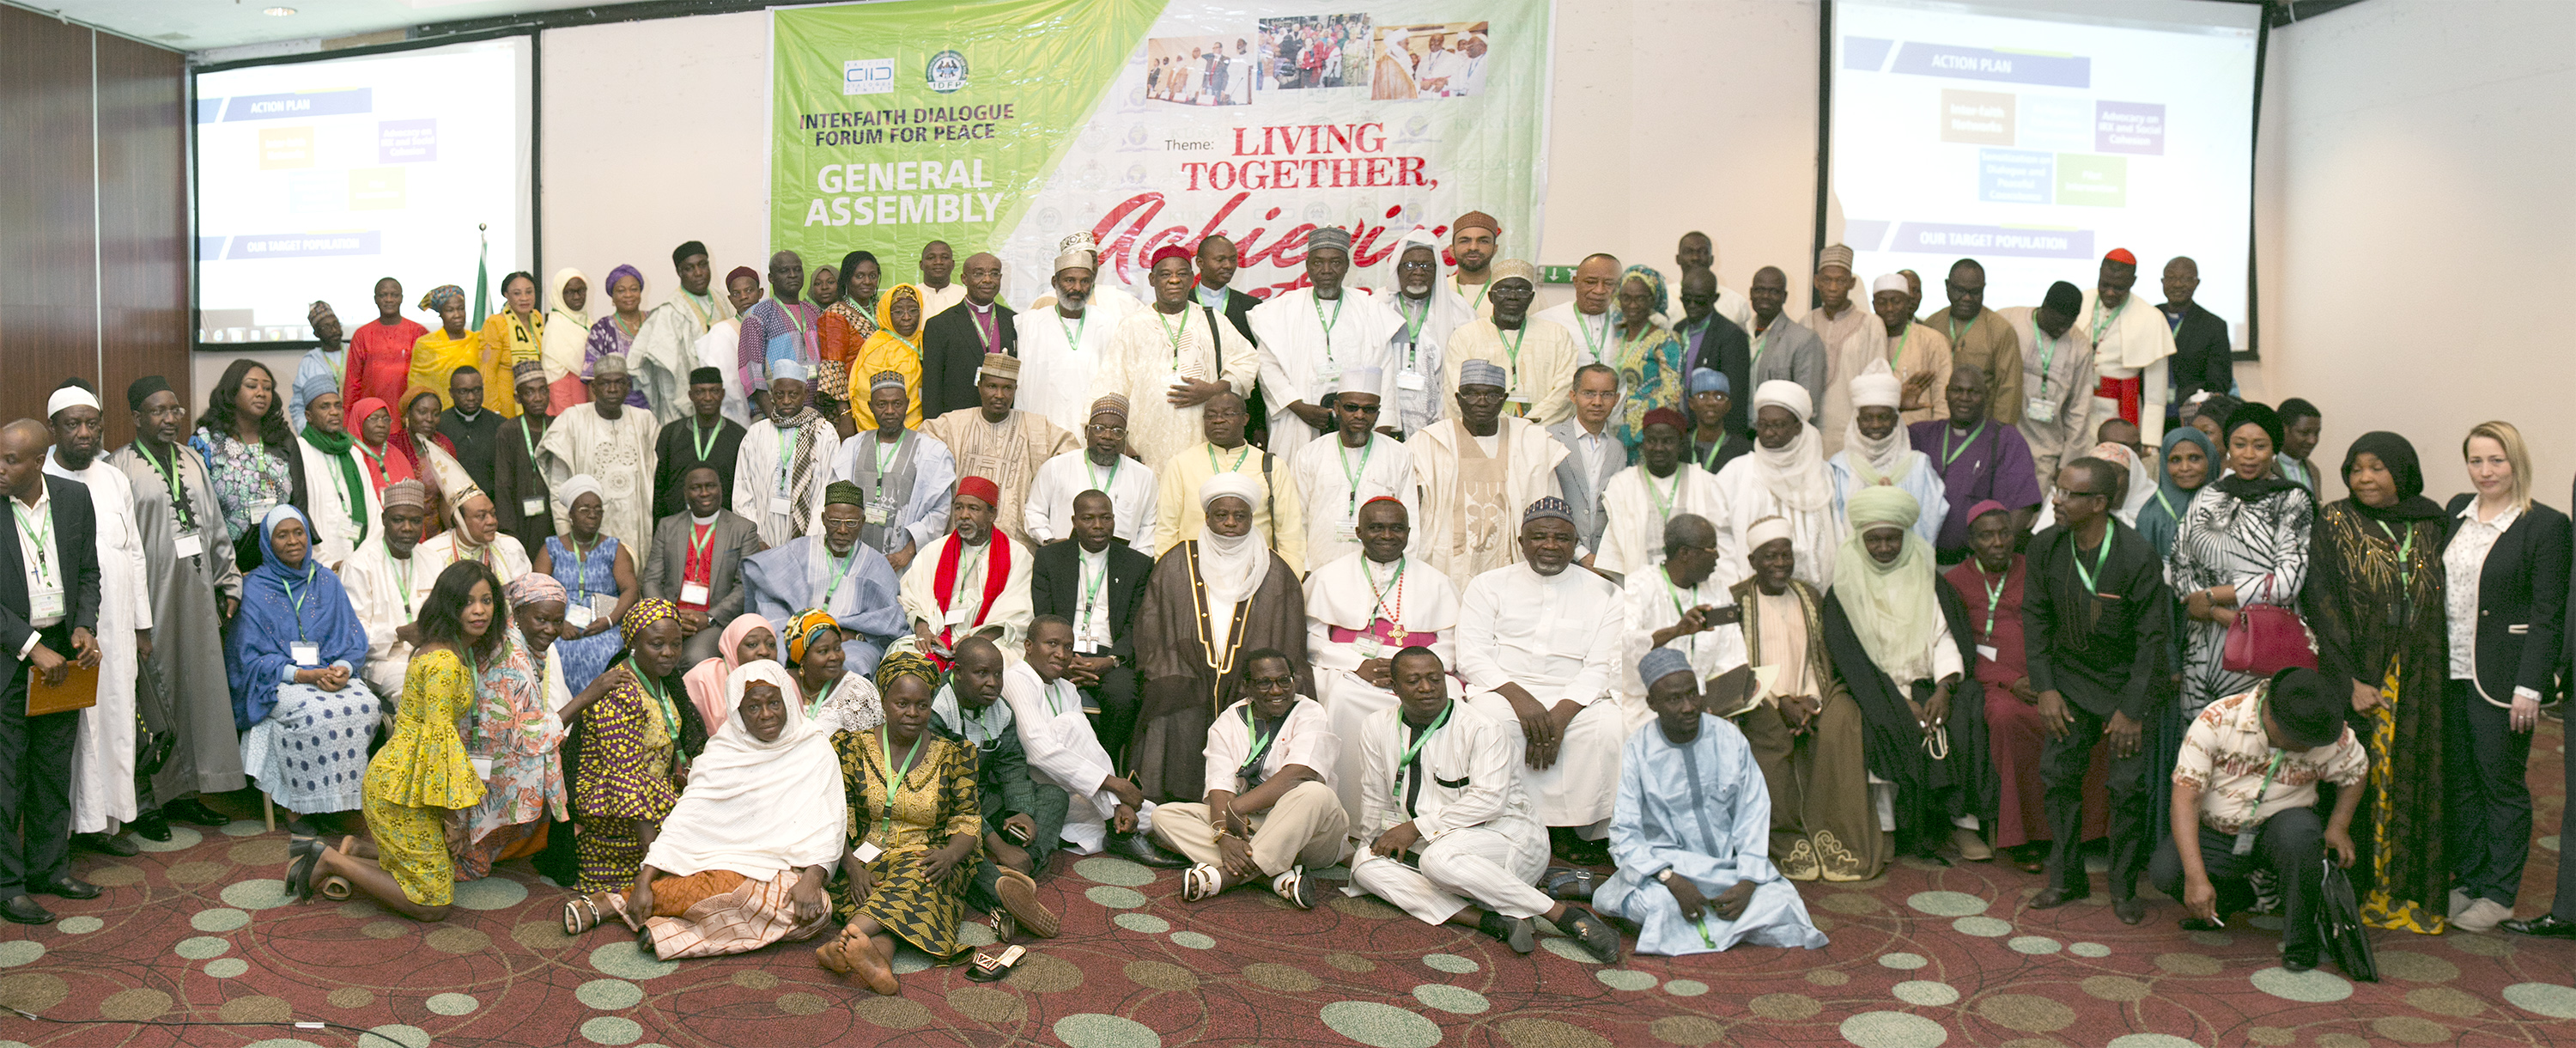 Peace and Reconciliation Through Interreligious Dialogue in Nigeria